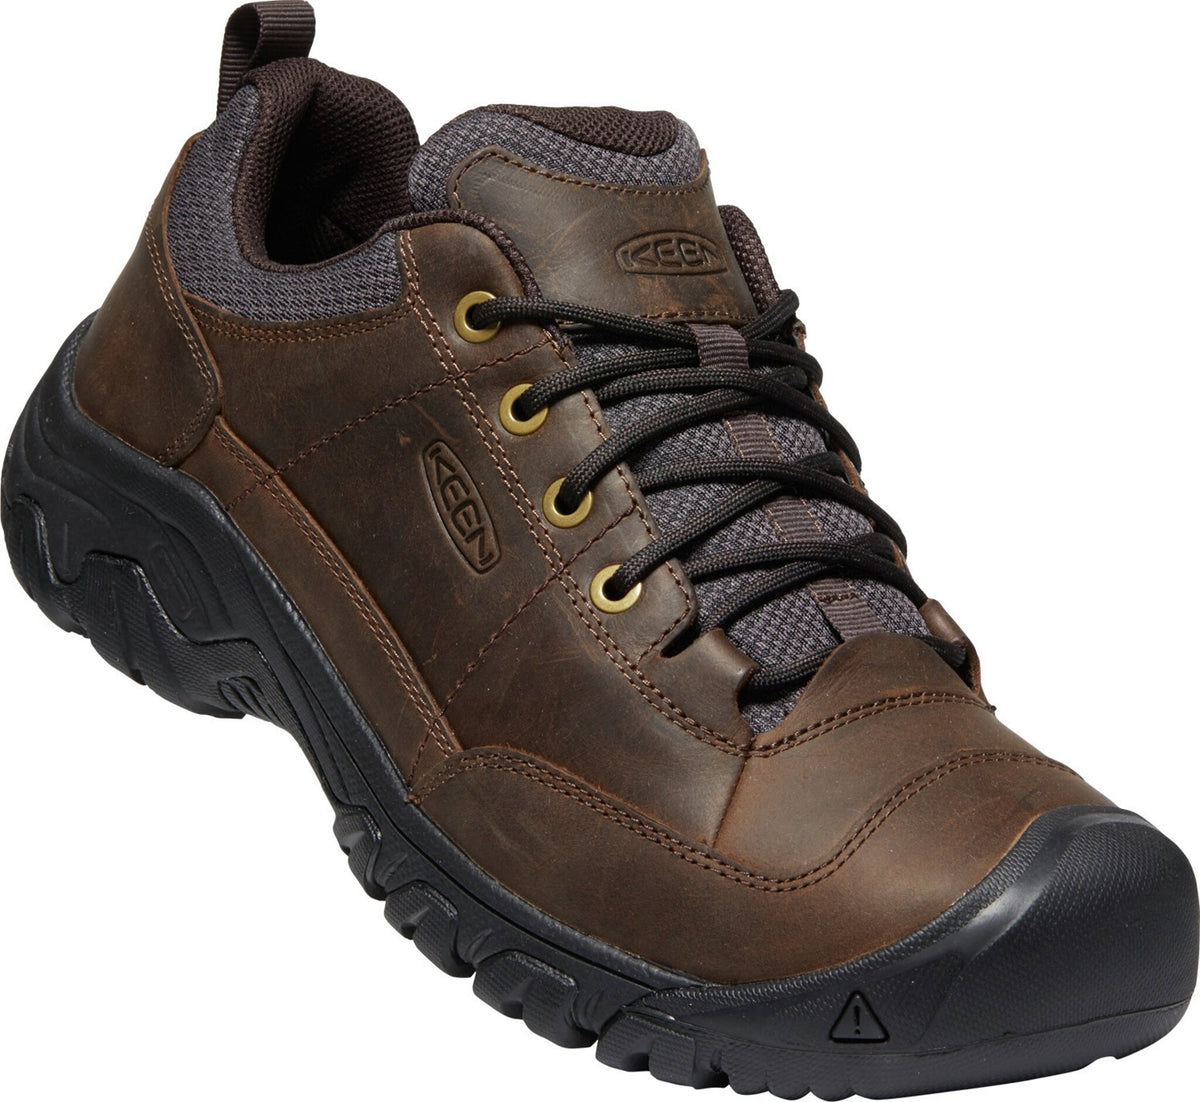 Keen Targhee III Oxford Wide Leather Shoes - Men's | Altitude Sports